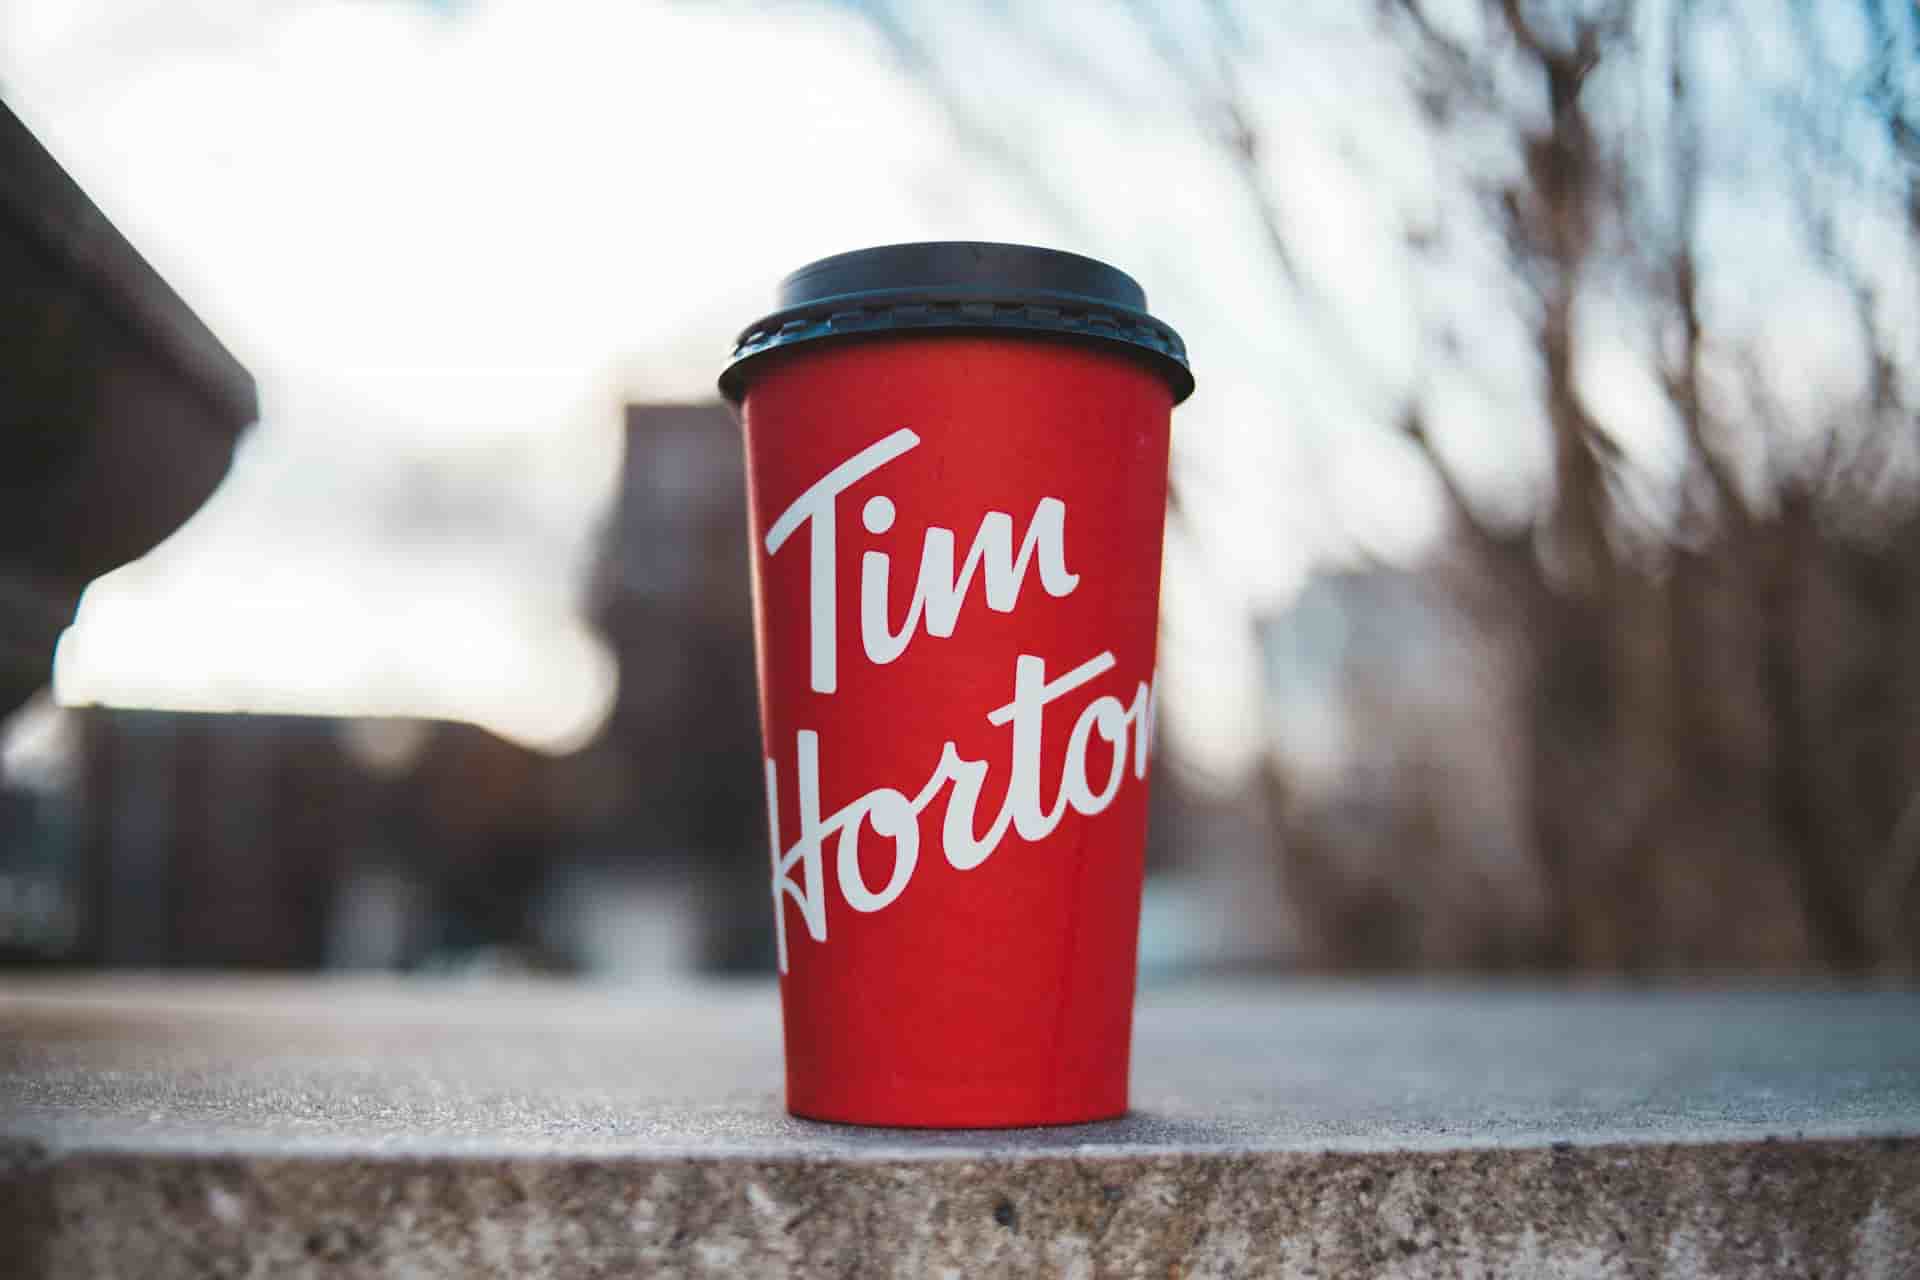 Is Tim Hortons Coffee Good?